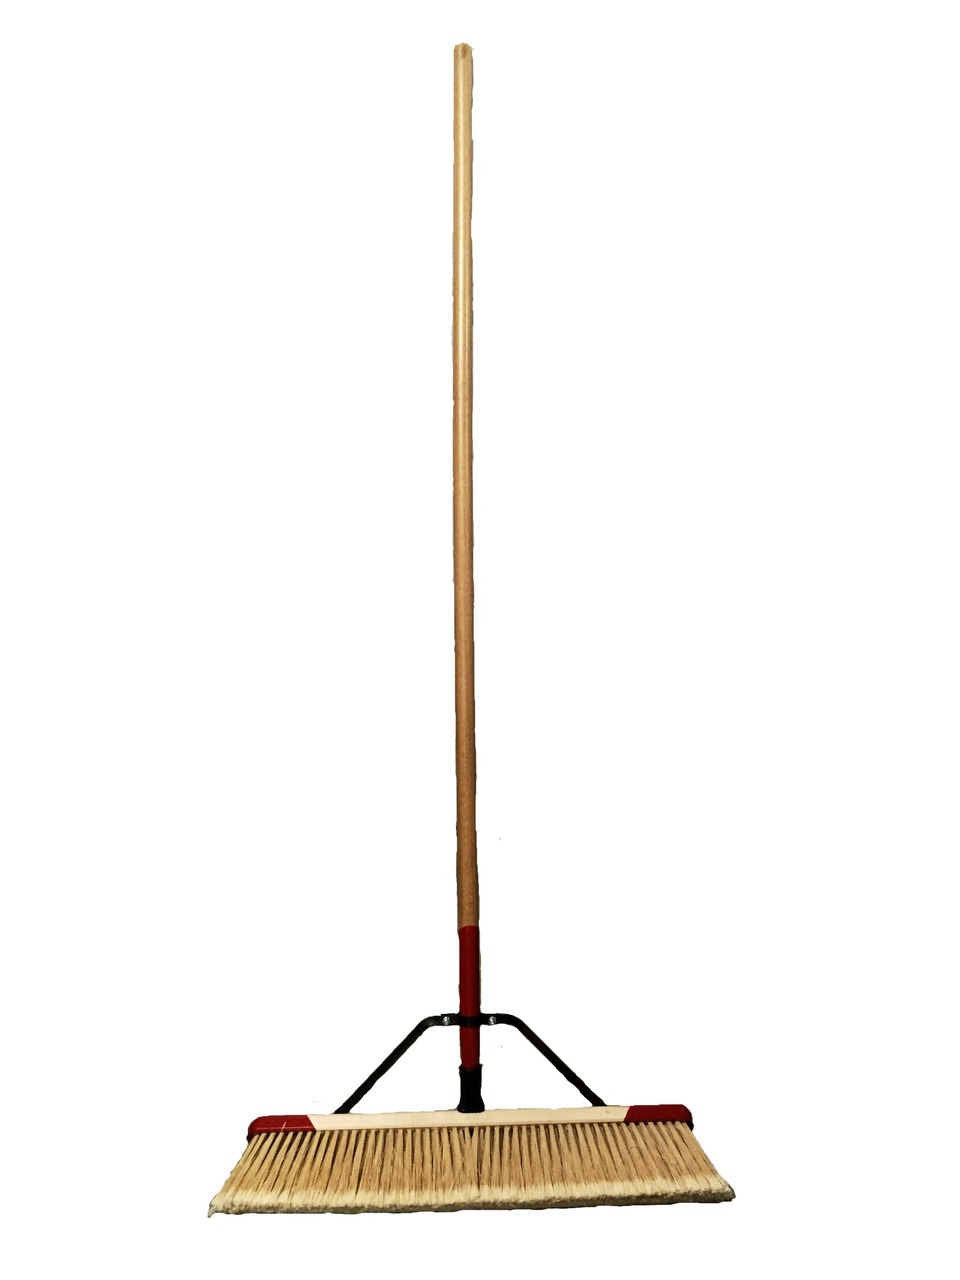 Buy Push Brooms Online in Hong Kong at Best Prices